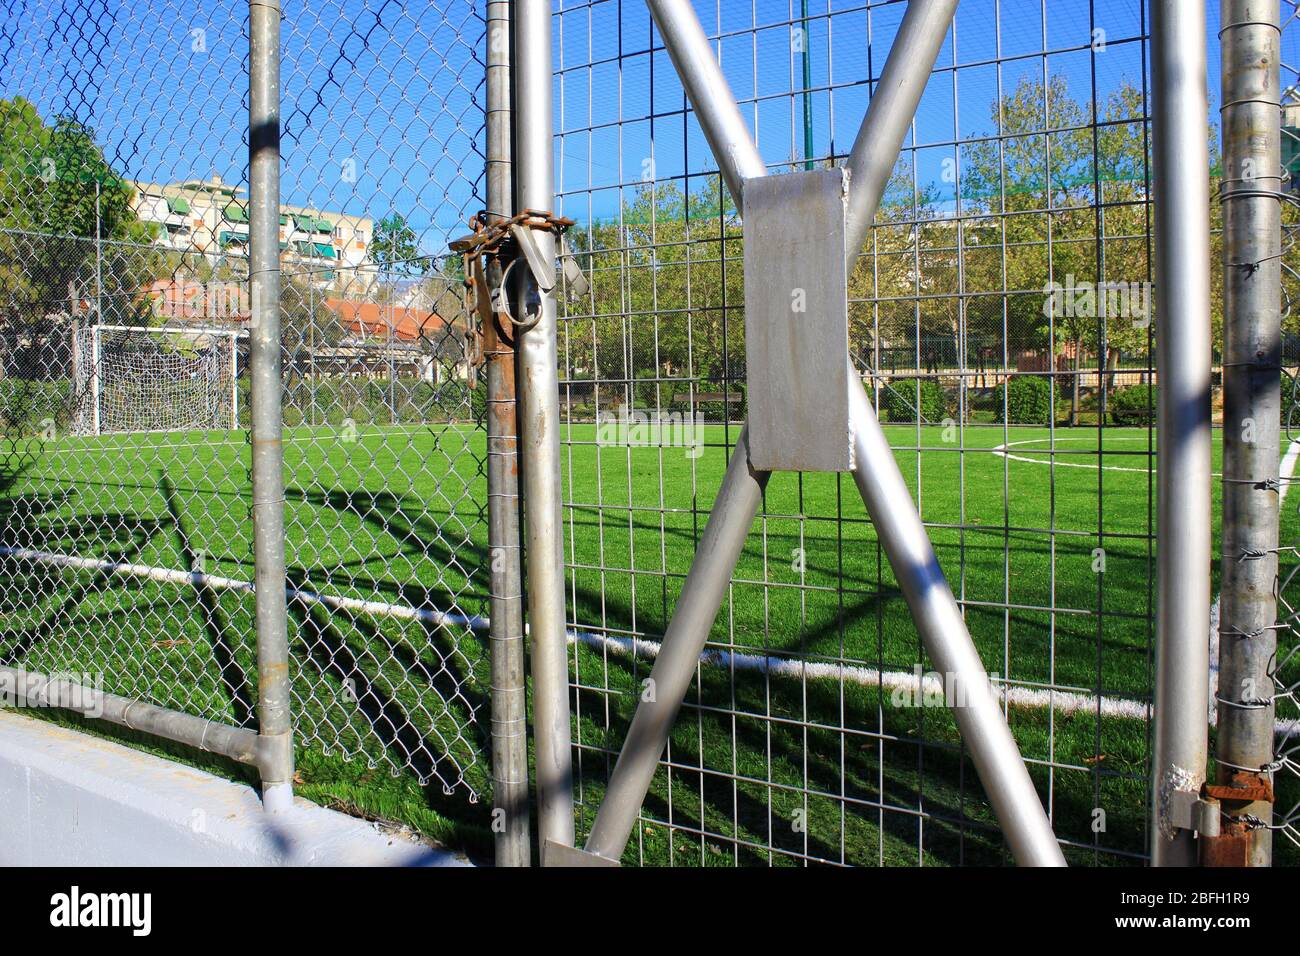 5 x 5 Fußballstadion wegen Coronavirus-Sperre geschlossen - Athen, Griechenland, 9. April 2020. Stockfoto